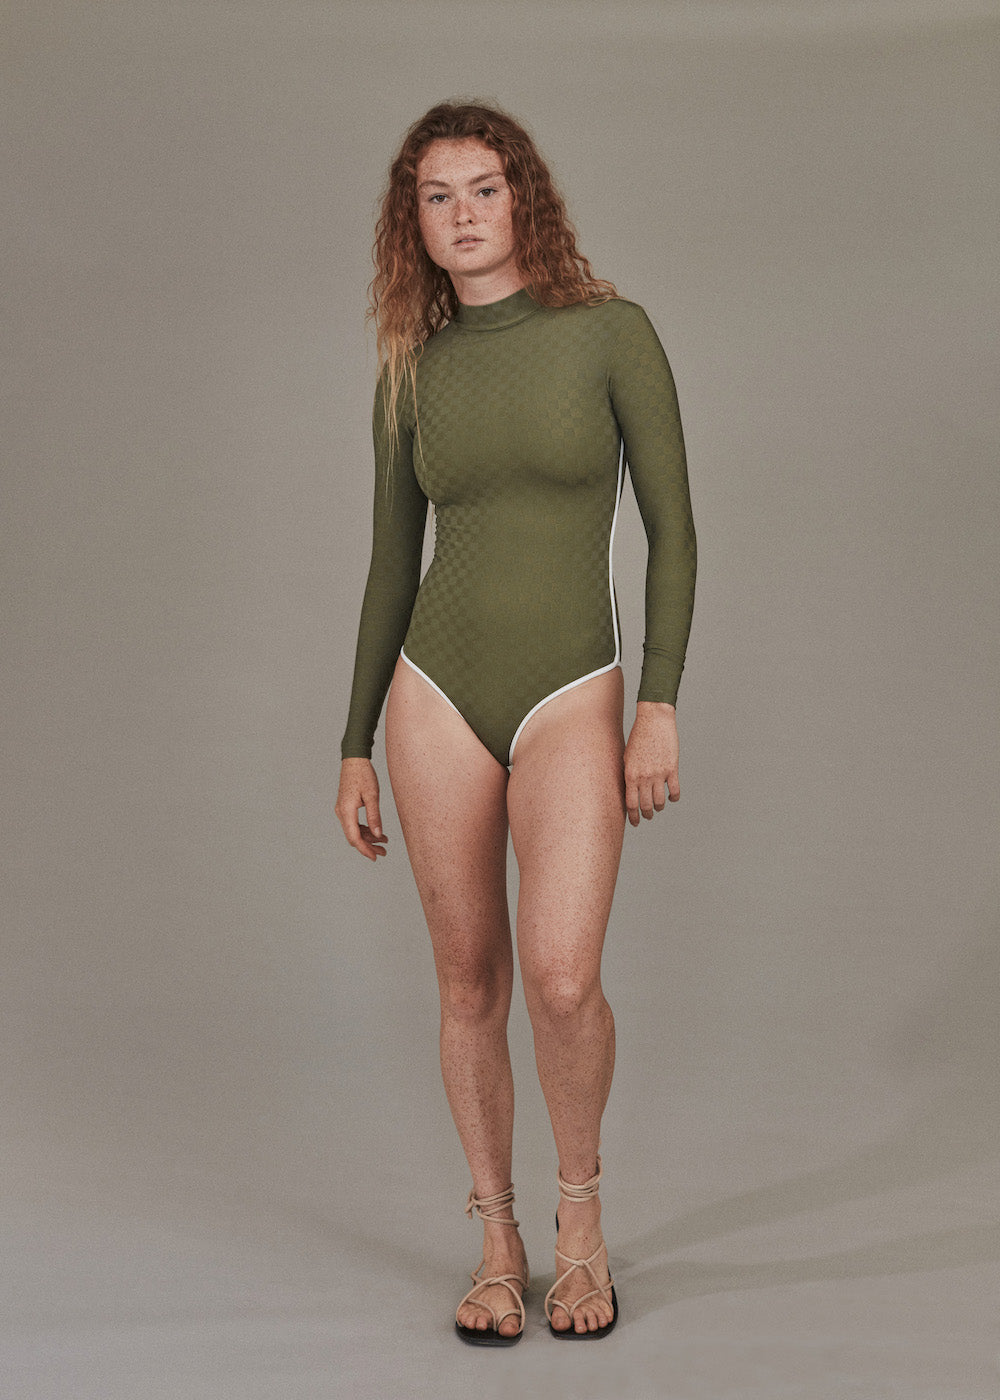 Acacia Swimwear Ehukai Body Suit  |Multiple Colors